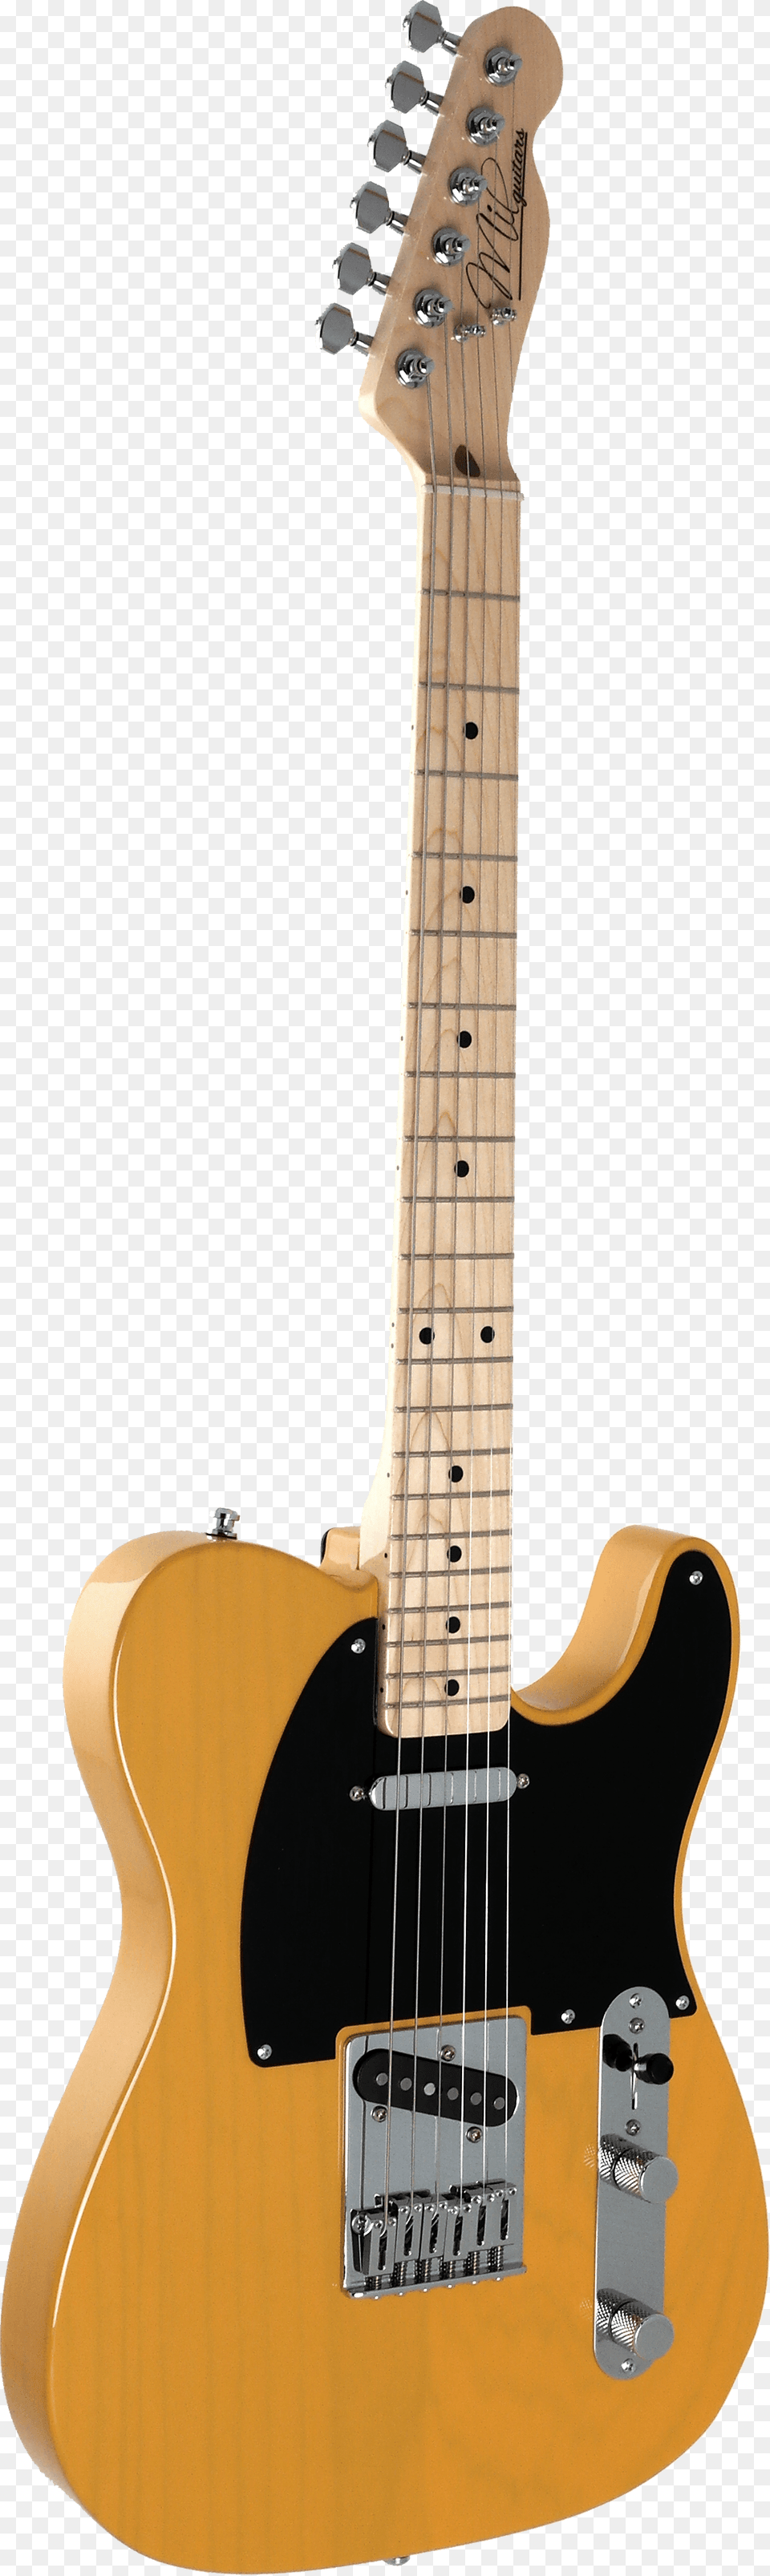 Slide Title Fender Standard Telecaster Electric Guitar, Musical Instrument, Bass Guitar, Electric Guitar Free Transparent Png